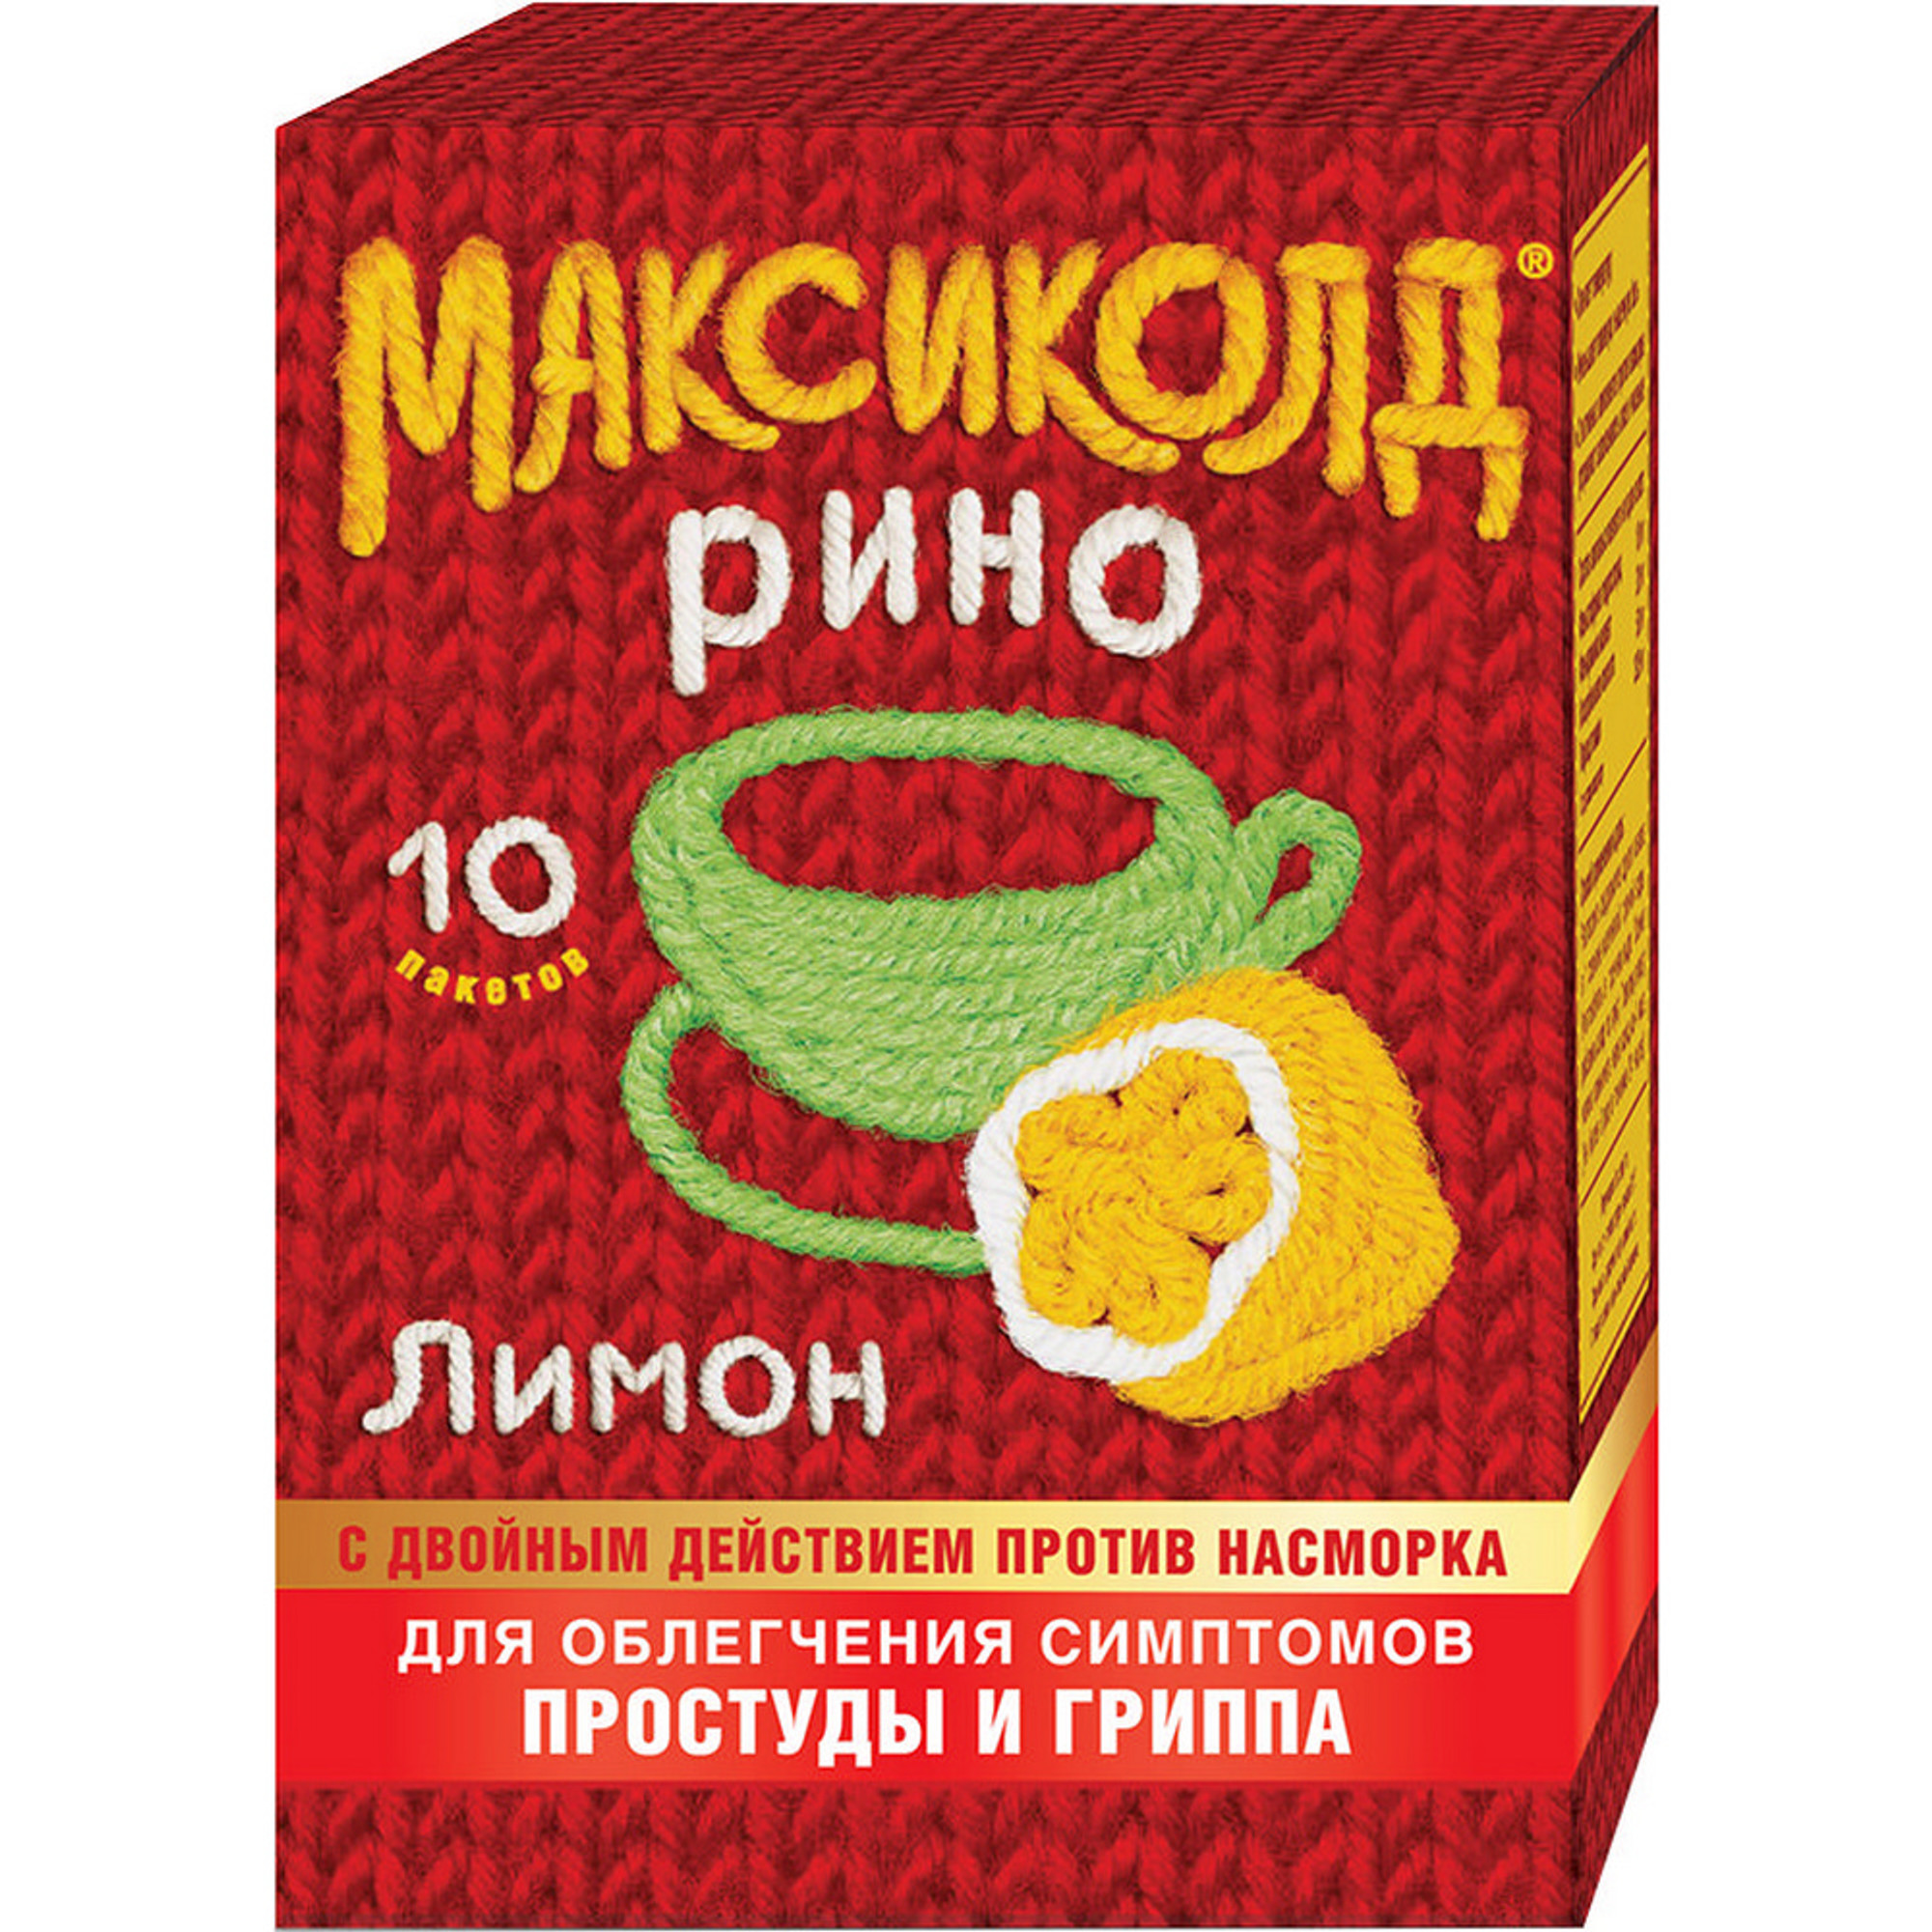 Максиколд Рино, порошок (лимон), пакетики 15 г, 10 шт. максиколд рино порошок малина пакетики 15 г 10 шт